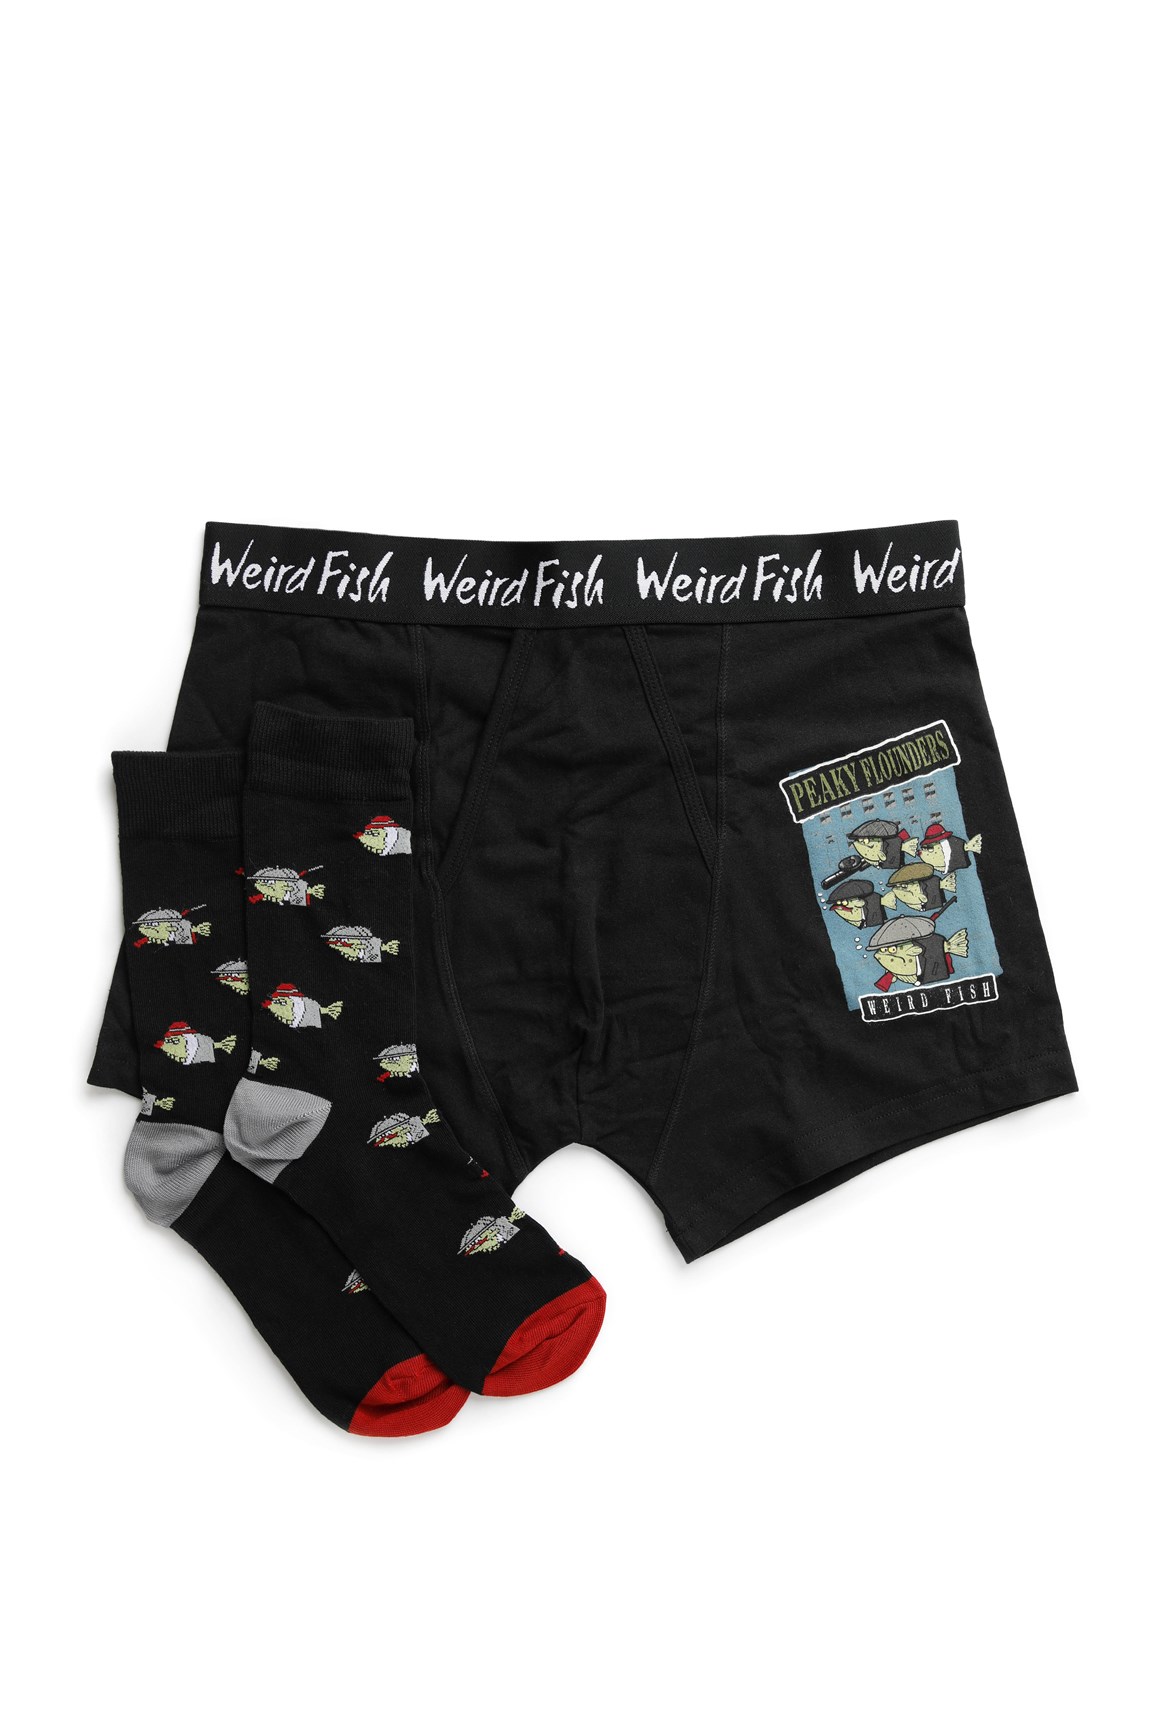 Weird Fish Brien Boxer & Sock Set Black Size 2XL